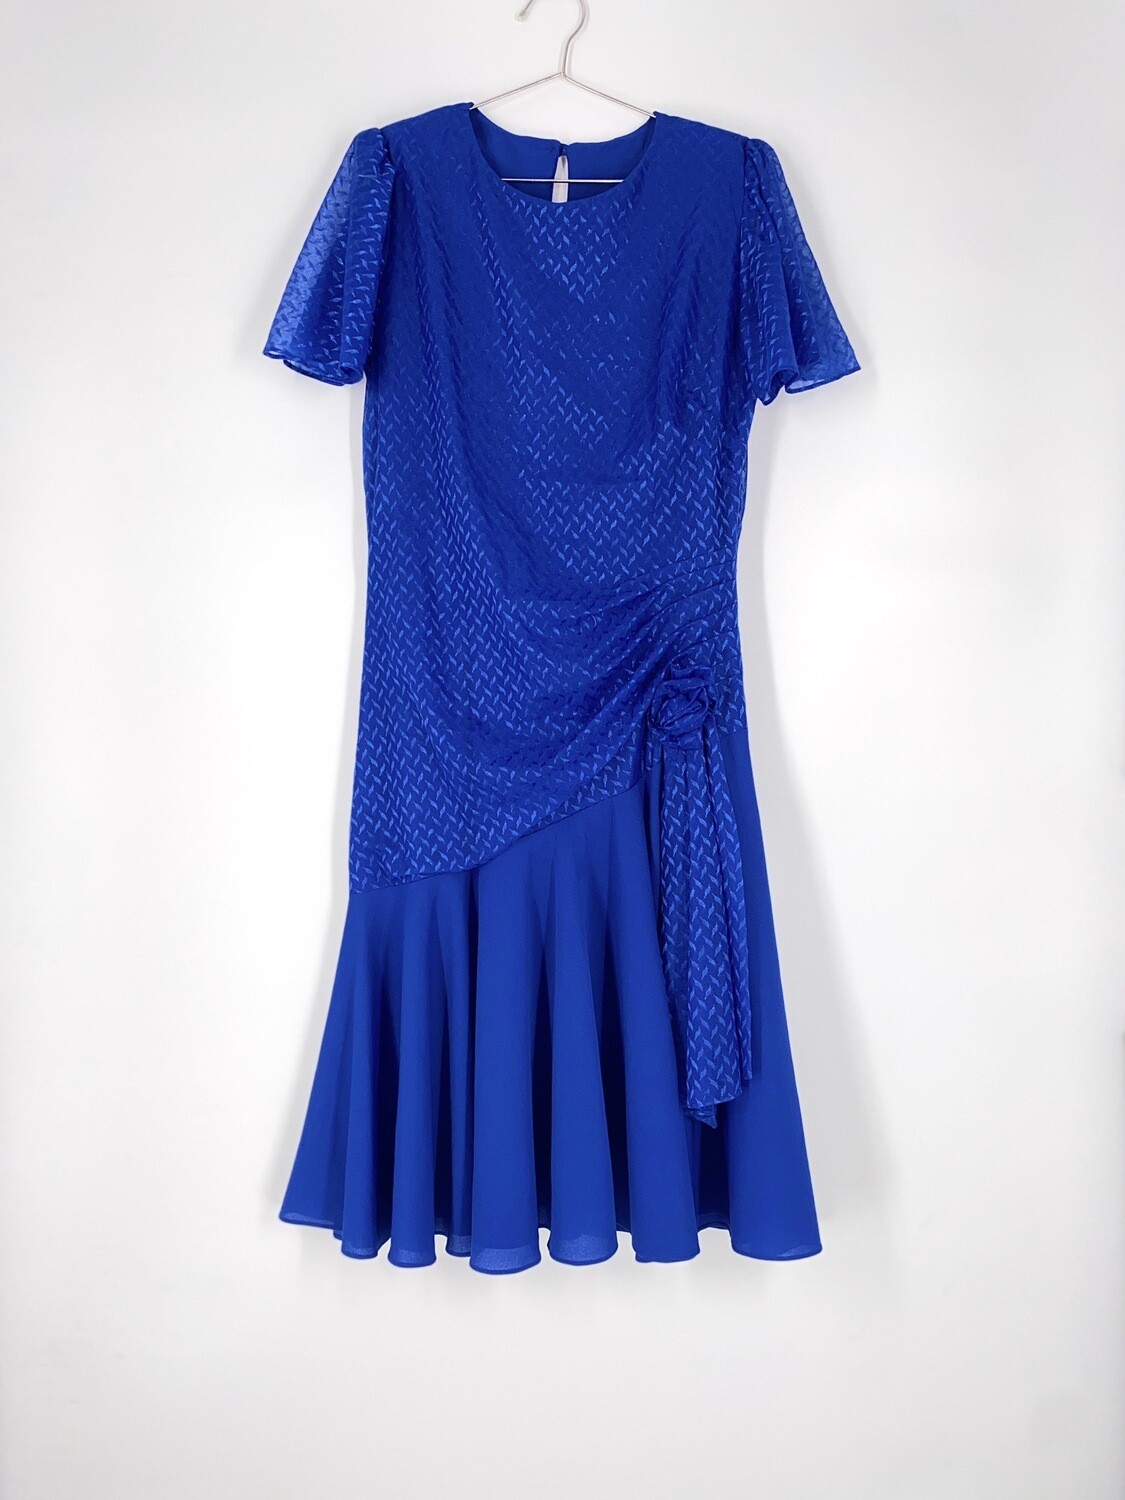 Blue Ruffled Dress Size M